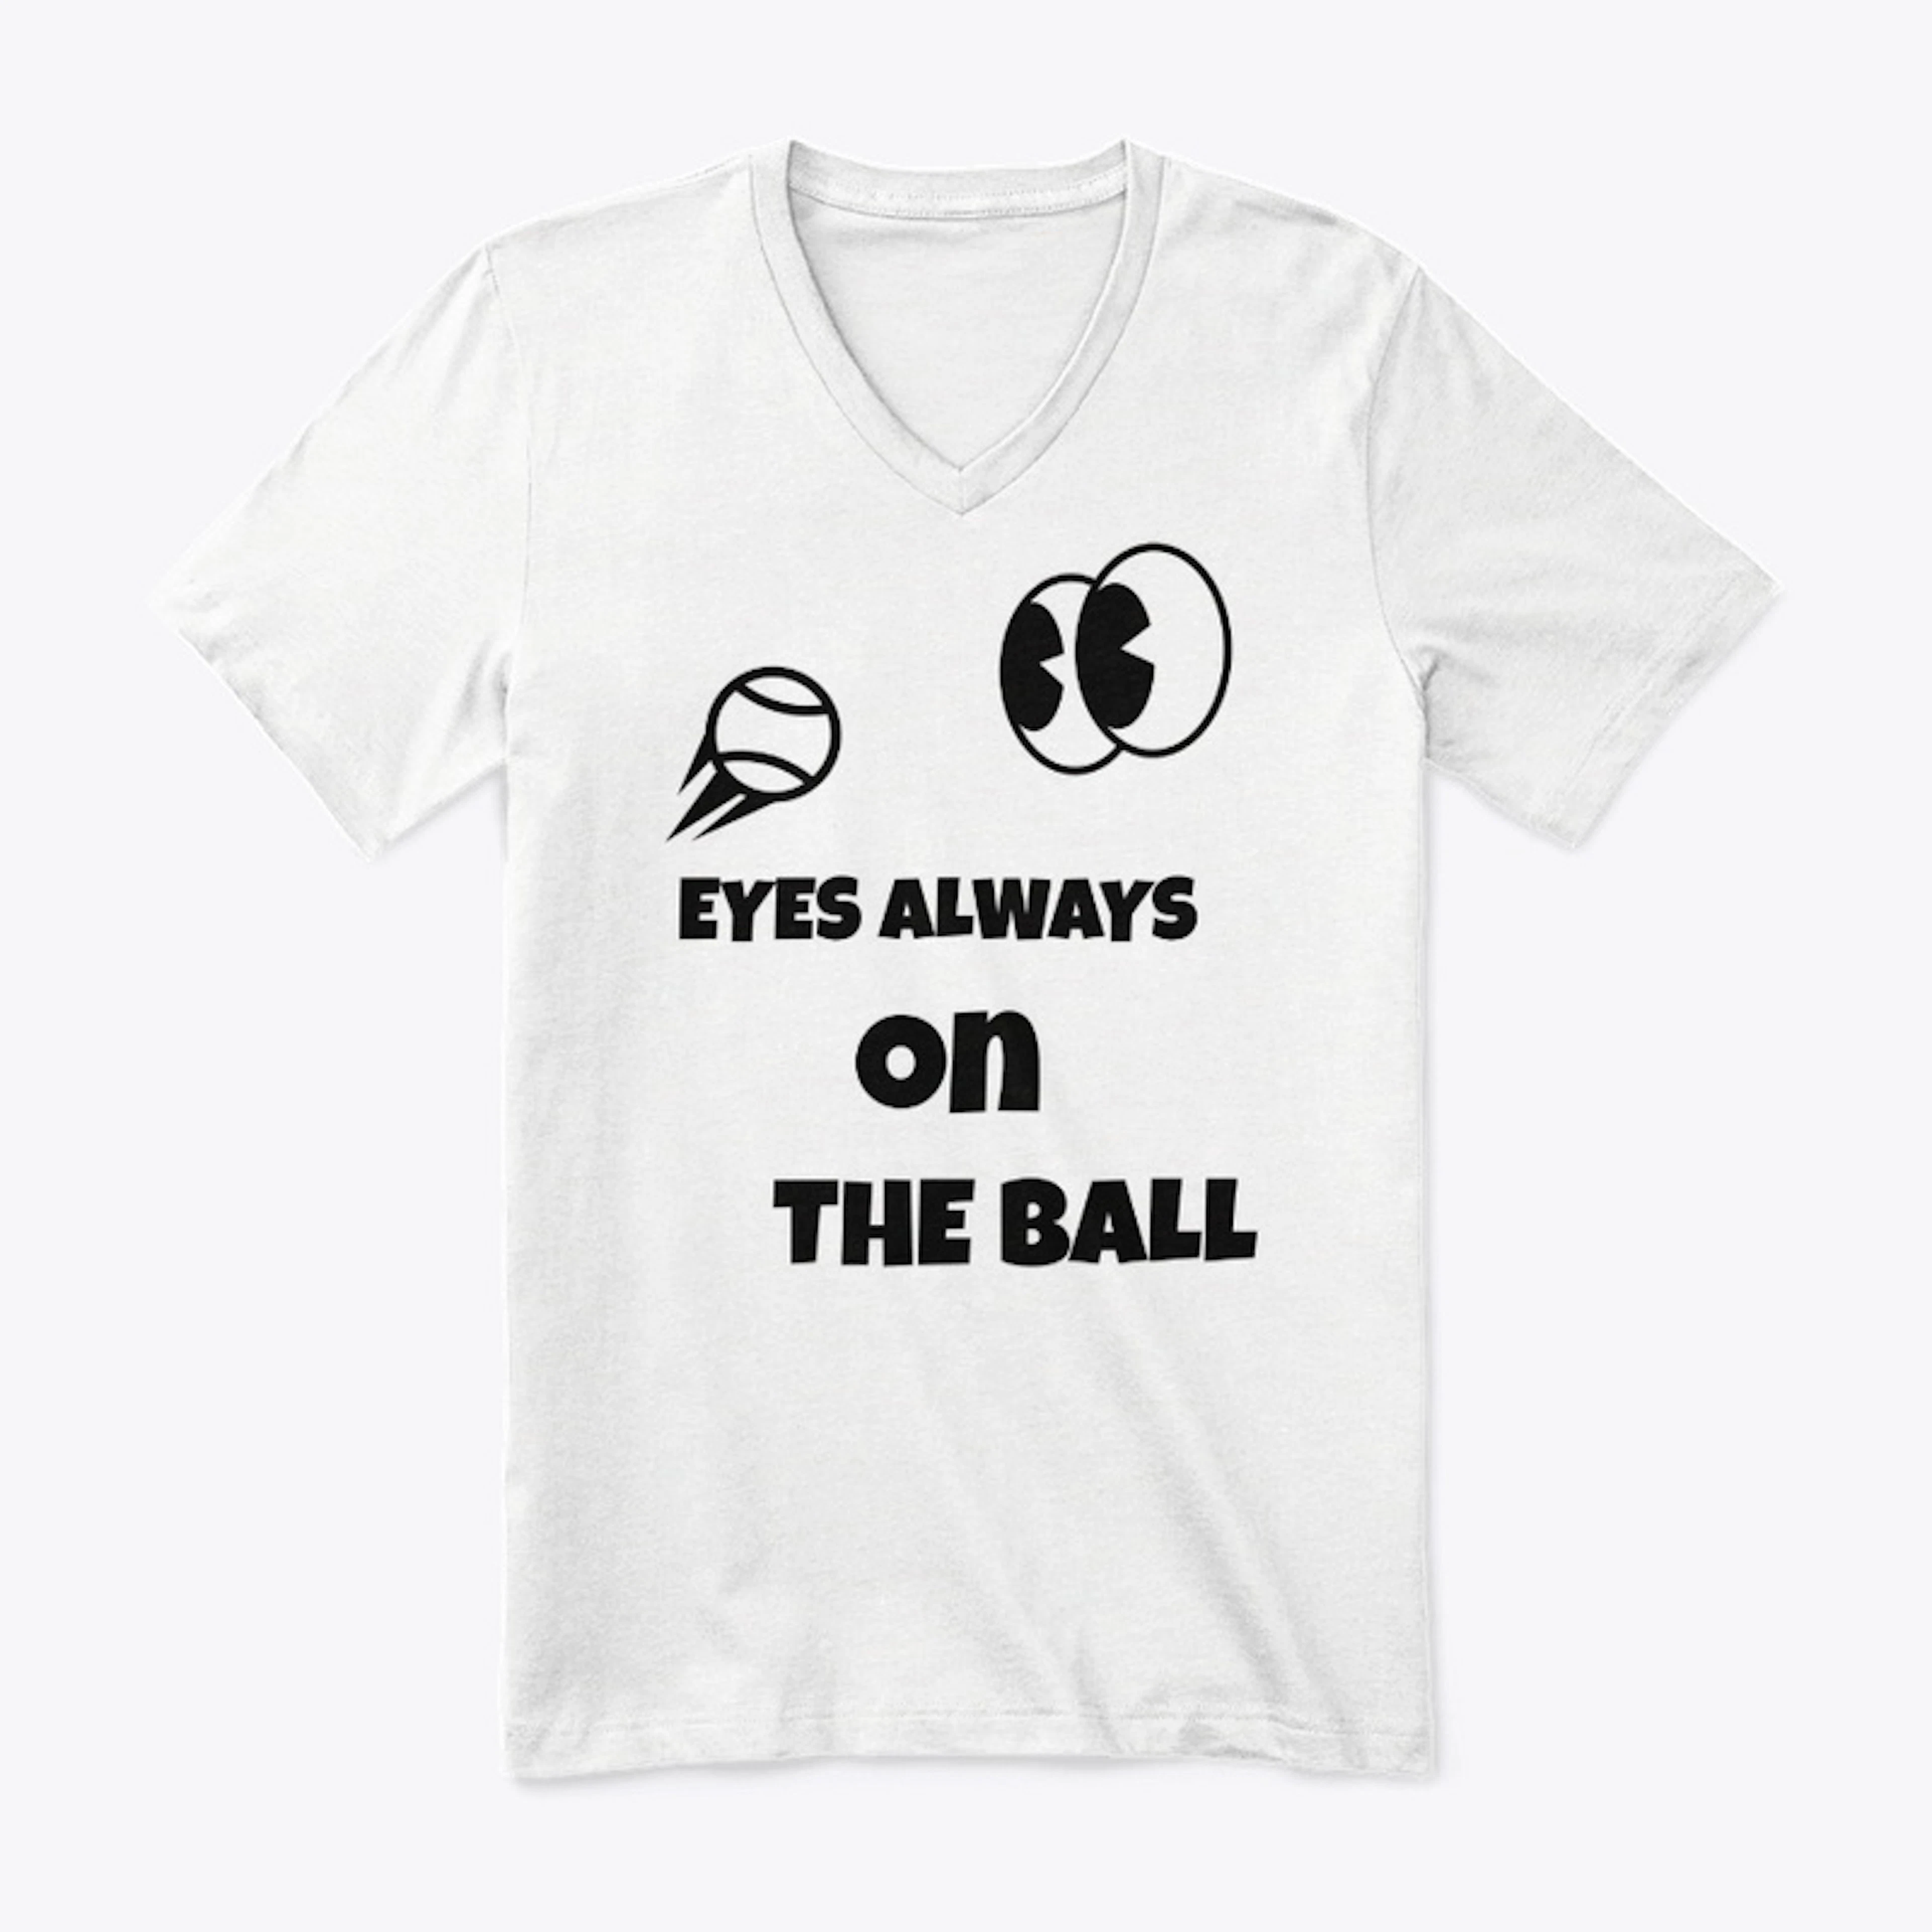 Eyes always on the ball